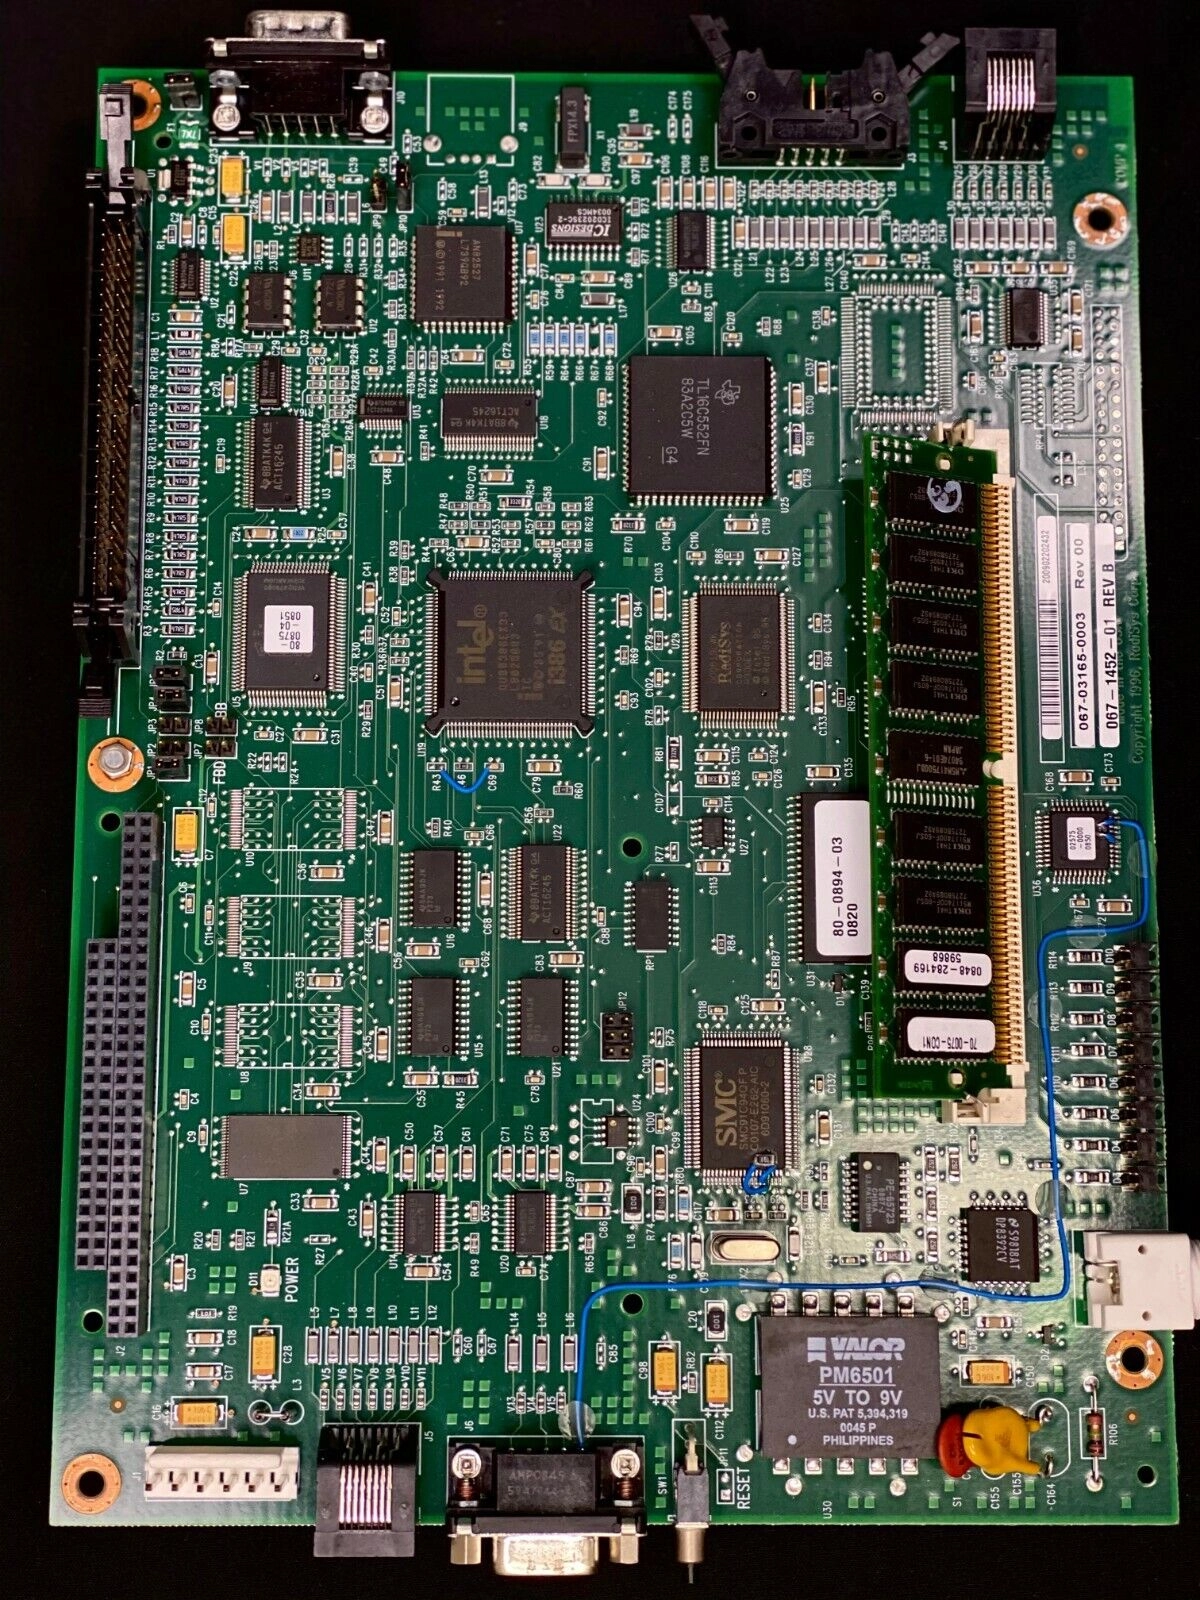 Embedded Intel i386 Ex chipset motherboard w/ RAM 